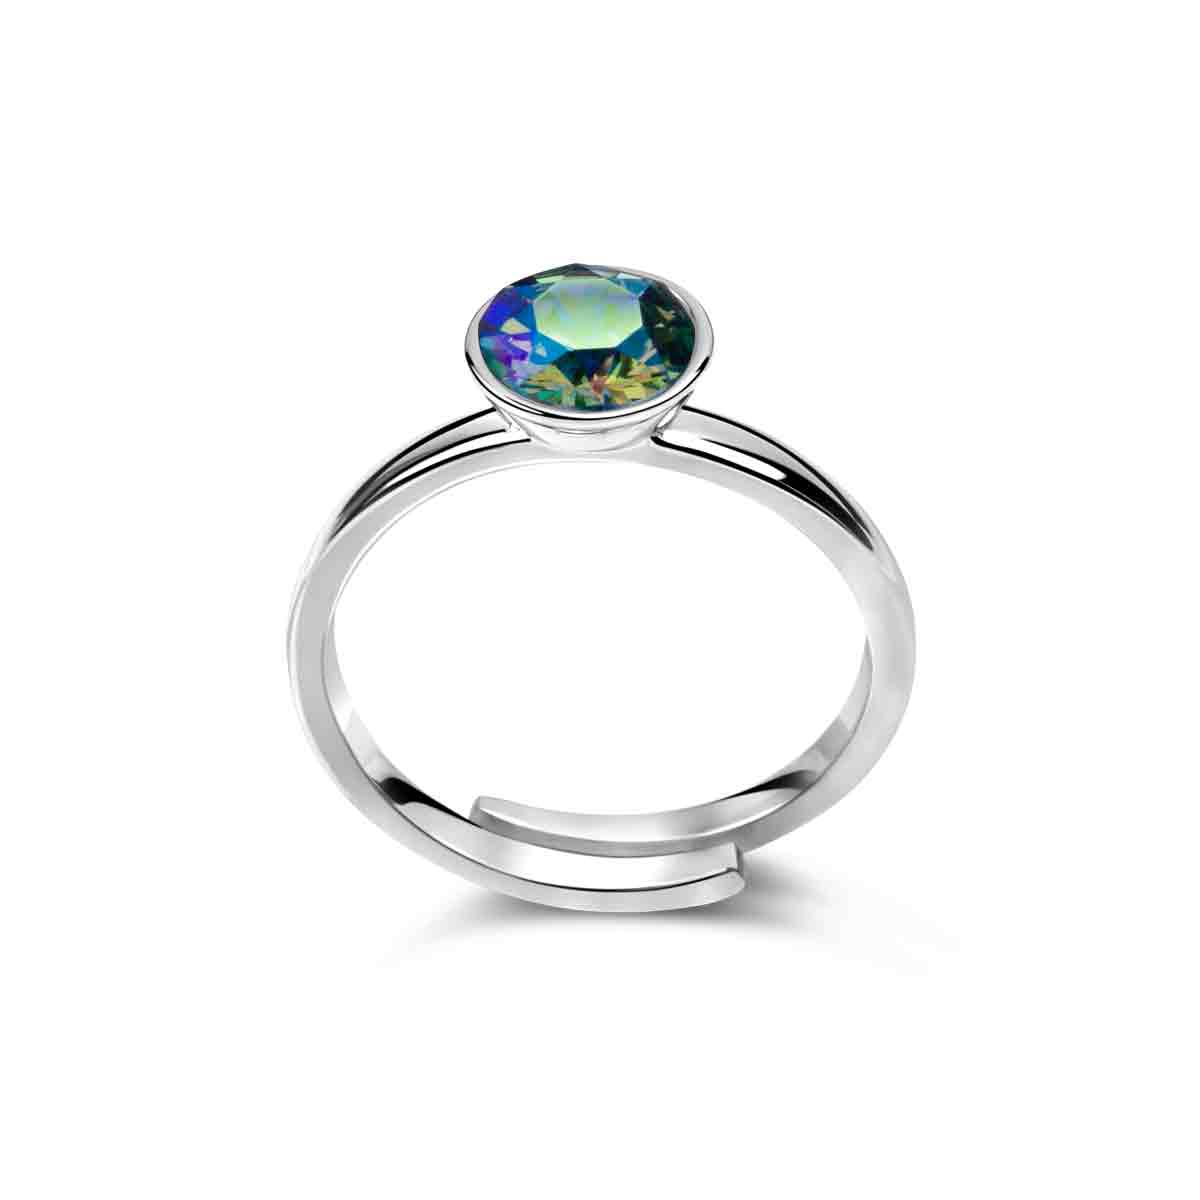 Ring 925 Silber blau verstellbar#oberflache_silber